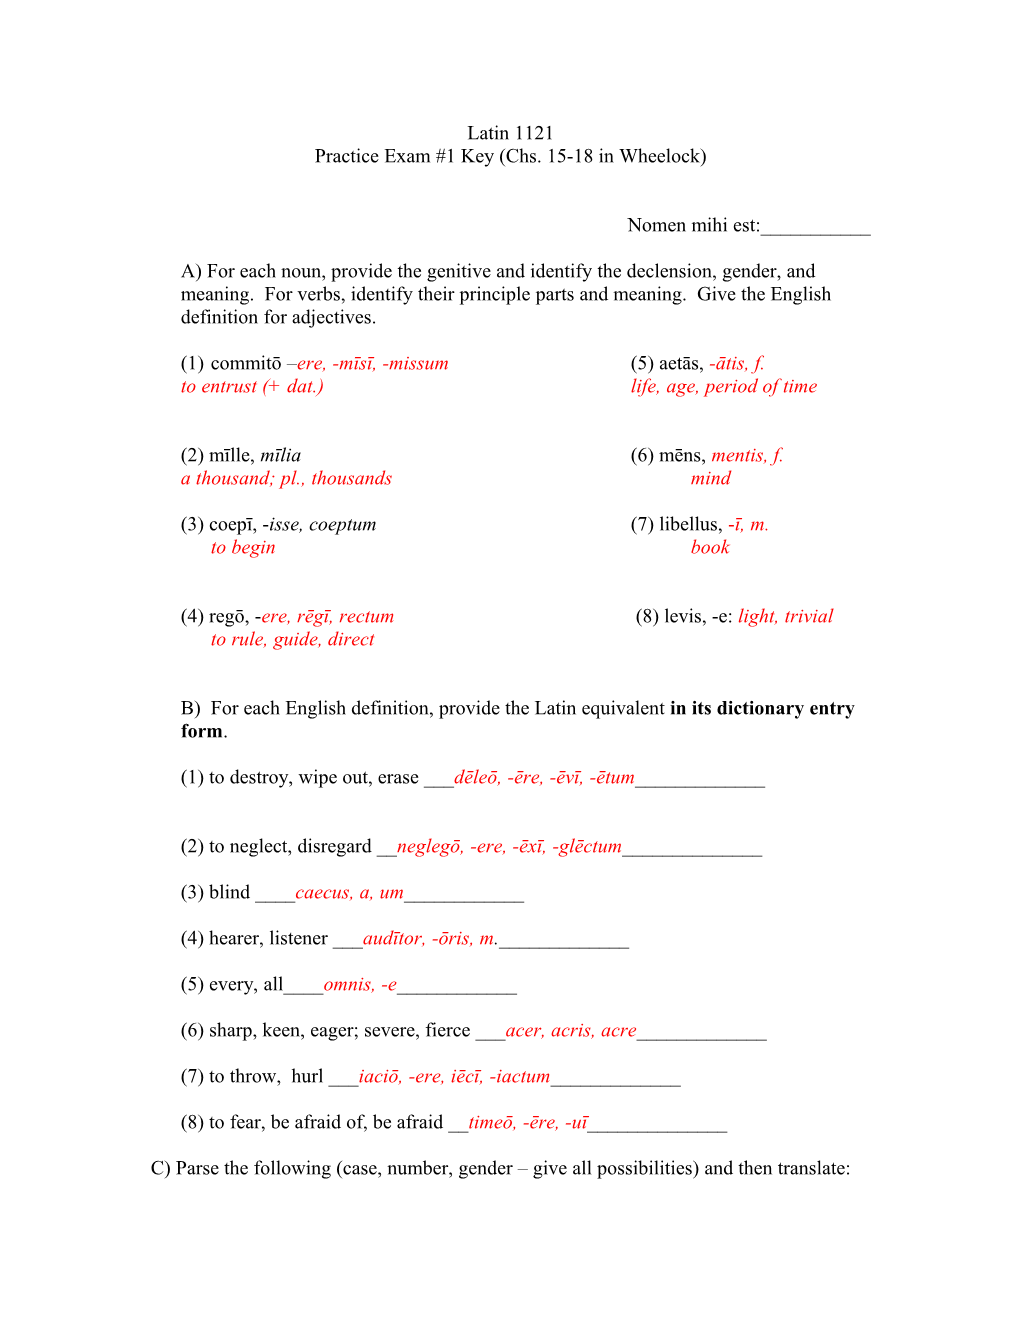 Practice Exam #1 Key (Chs. 15-18 in Wheelock)